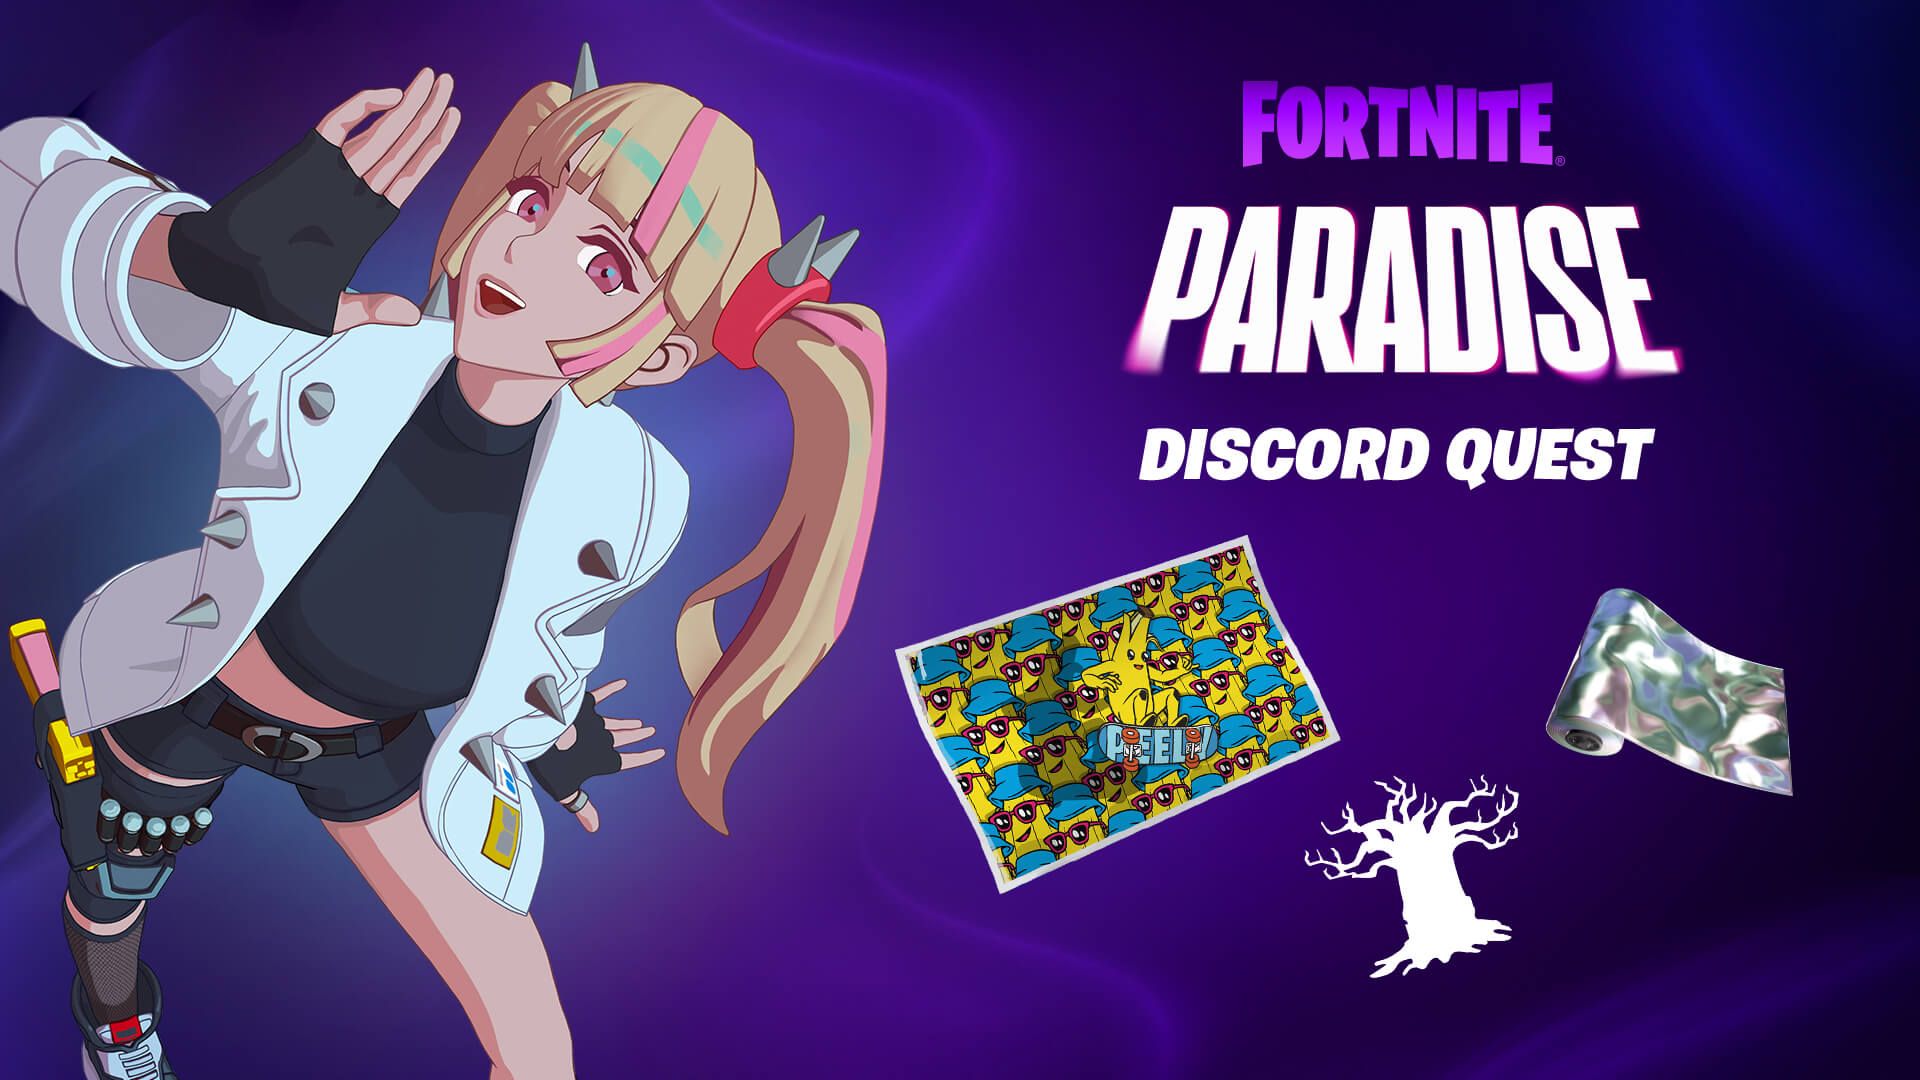 Fortnite Paradise Discord Quest rewards